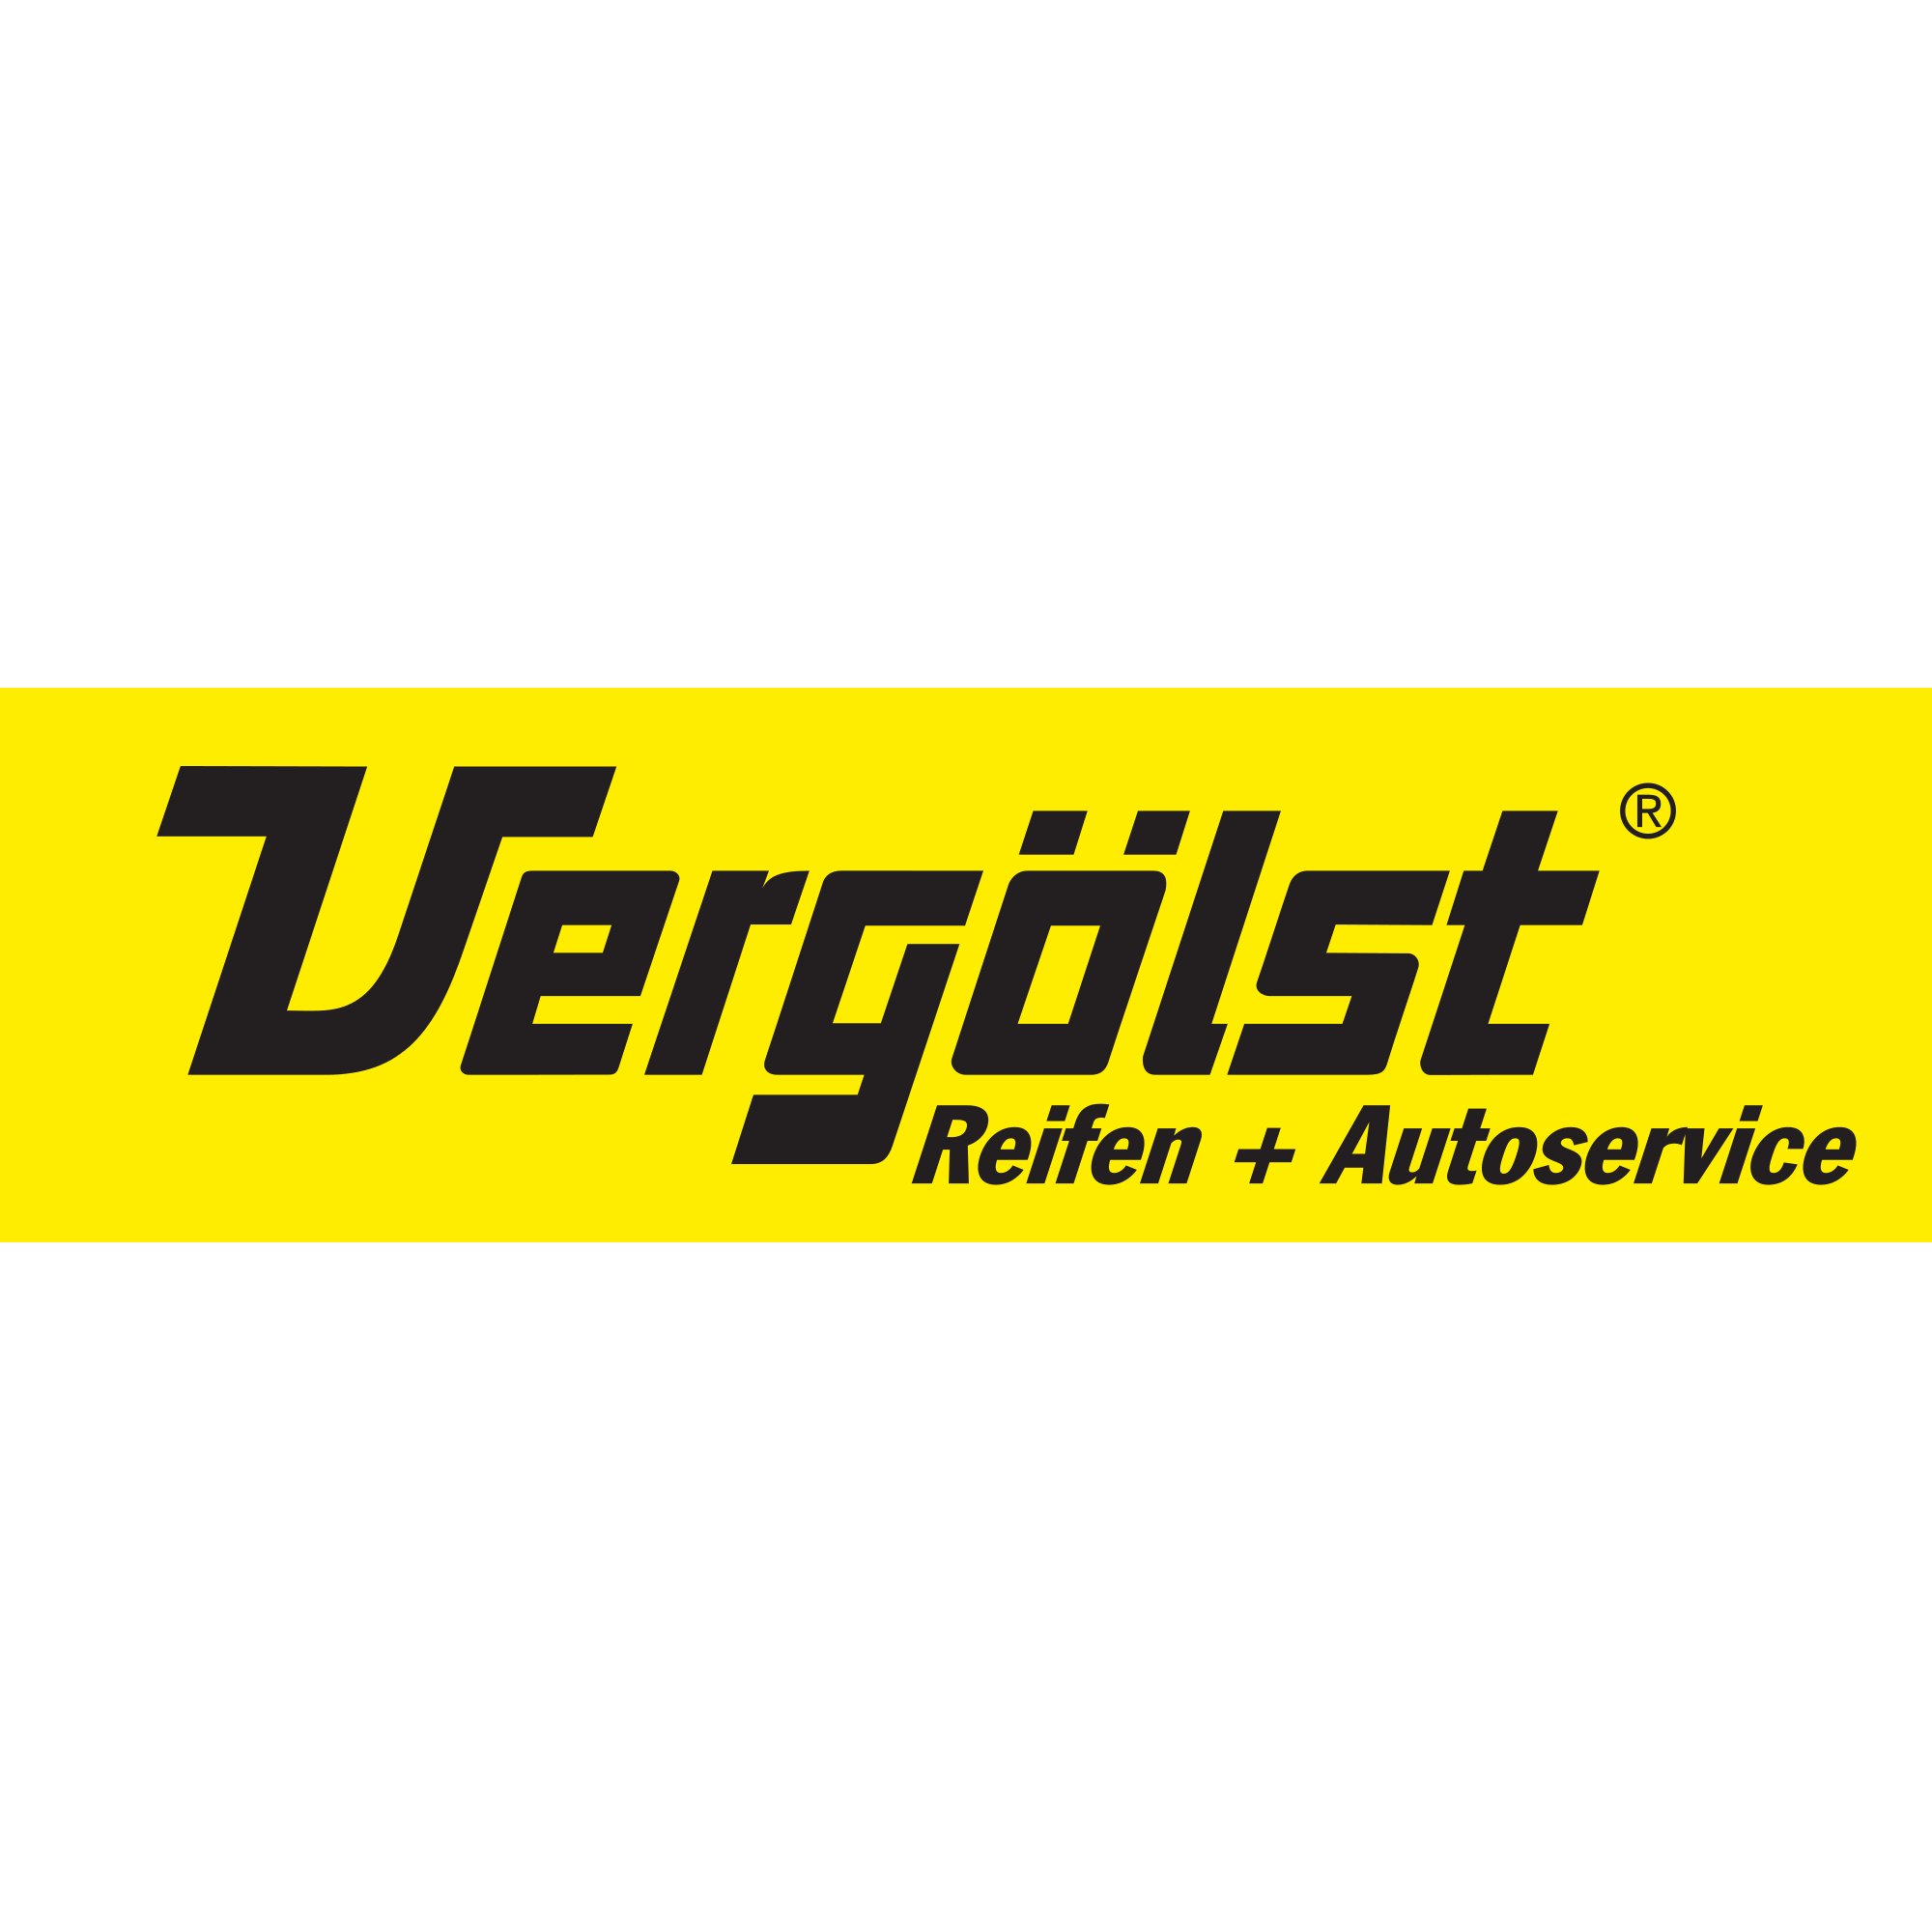 Reifen + Autoservice Vergölst in Coburg - Logo